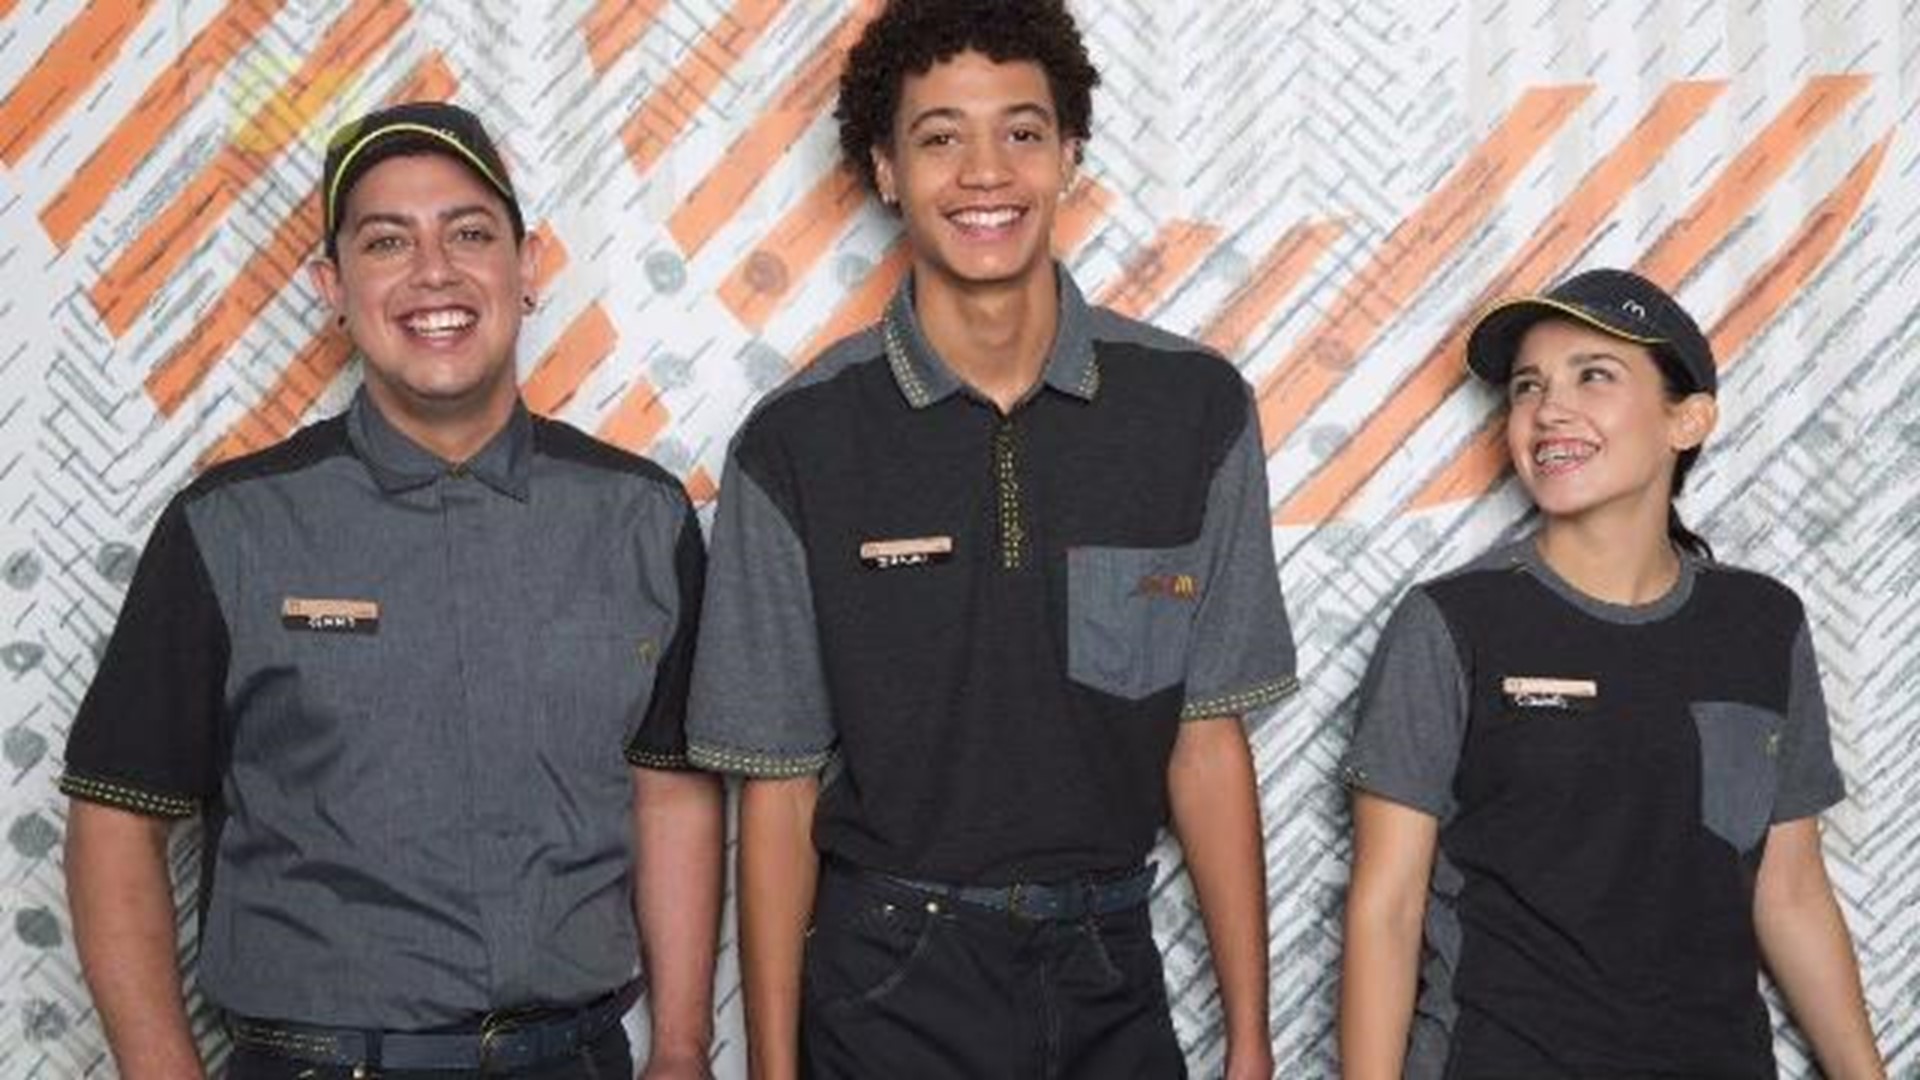 McDonald's Employee Uniforms Got a Designer Upgrade